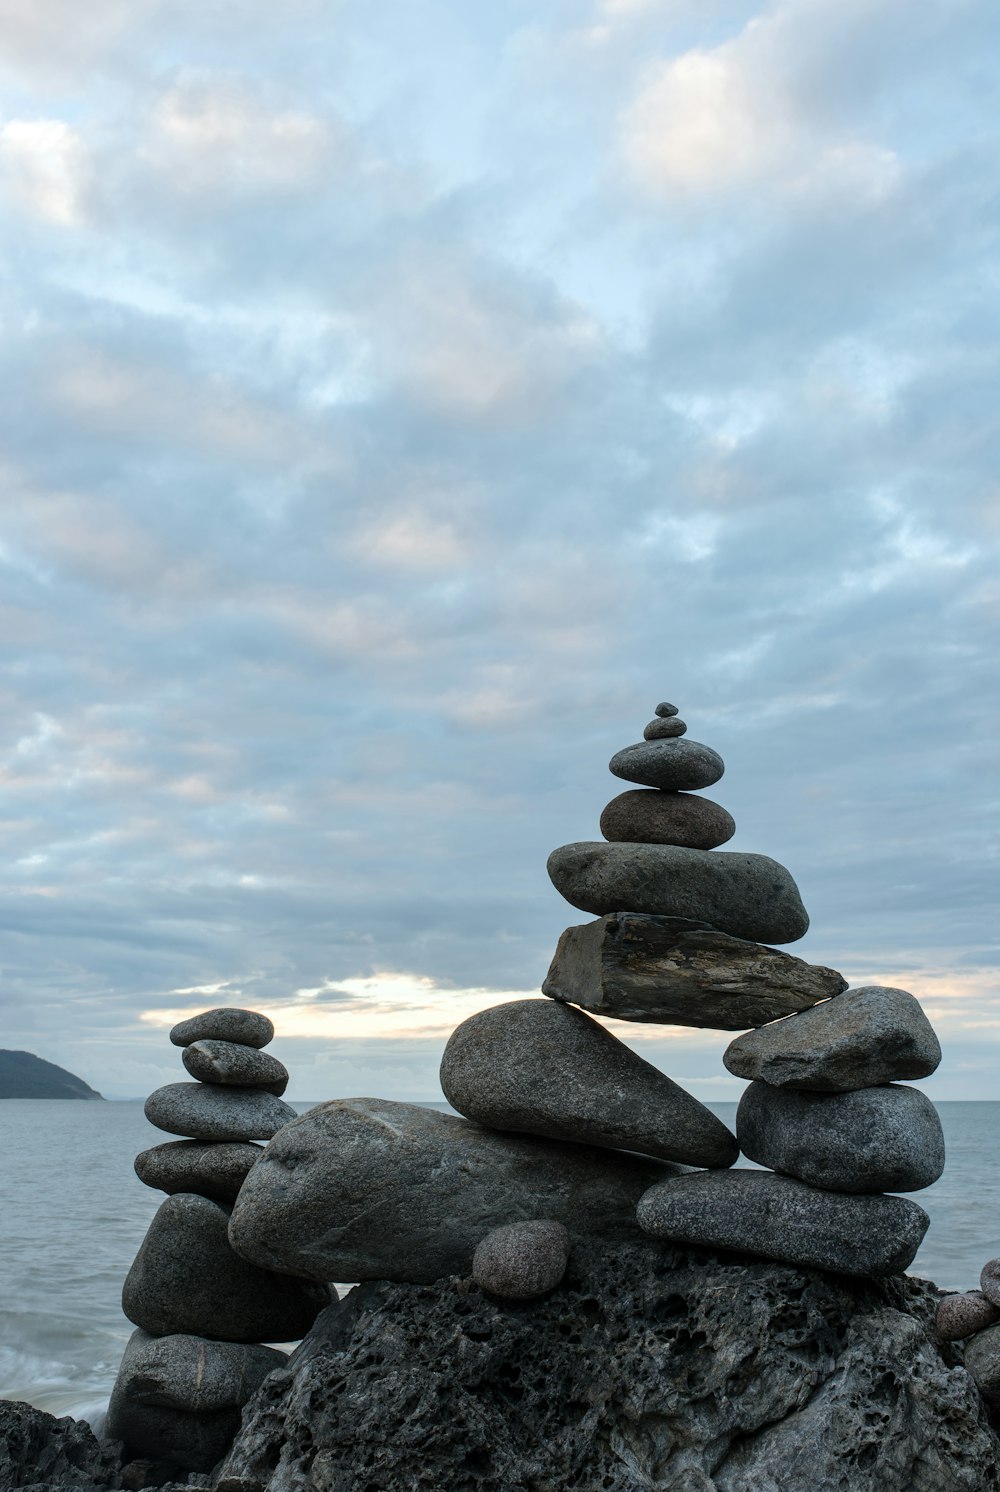 pedras equilibradas na rocha ao lado do oceano